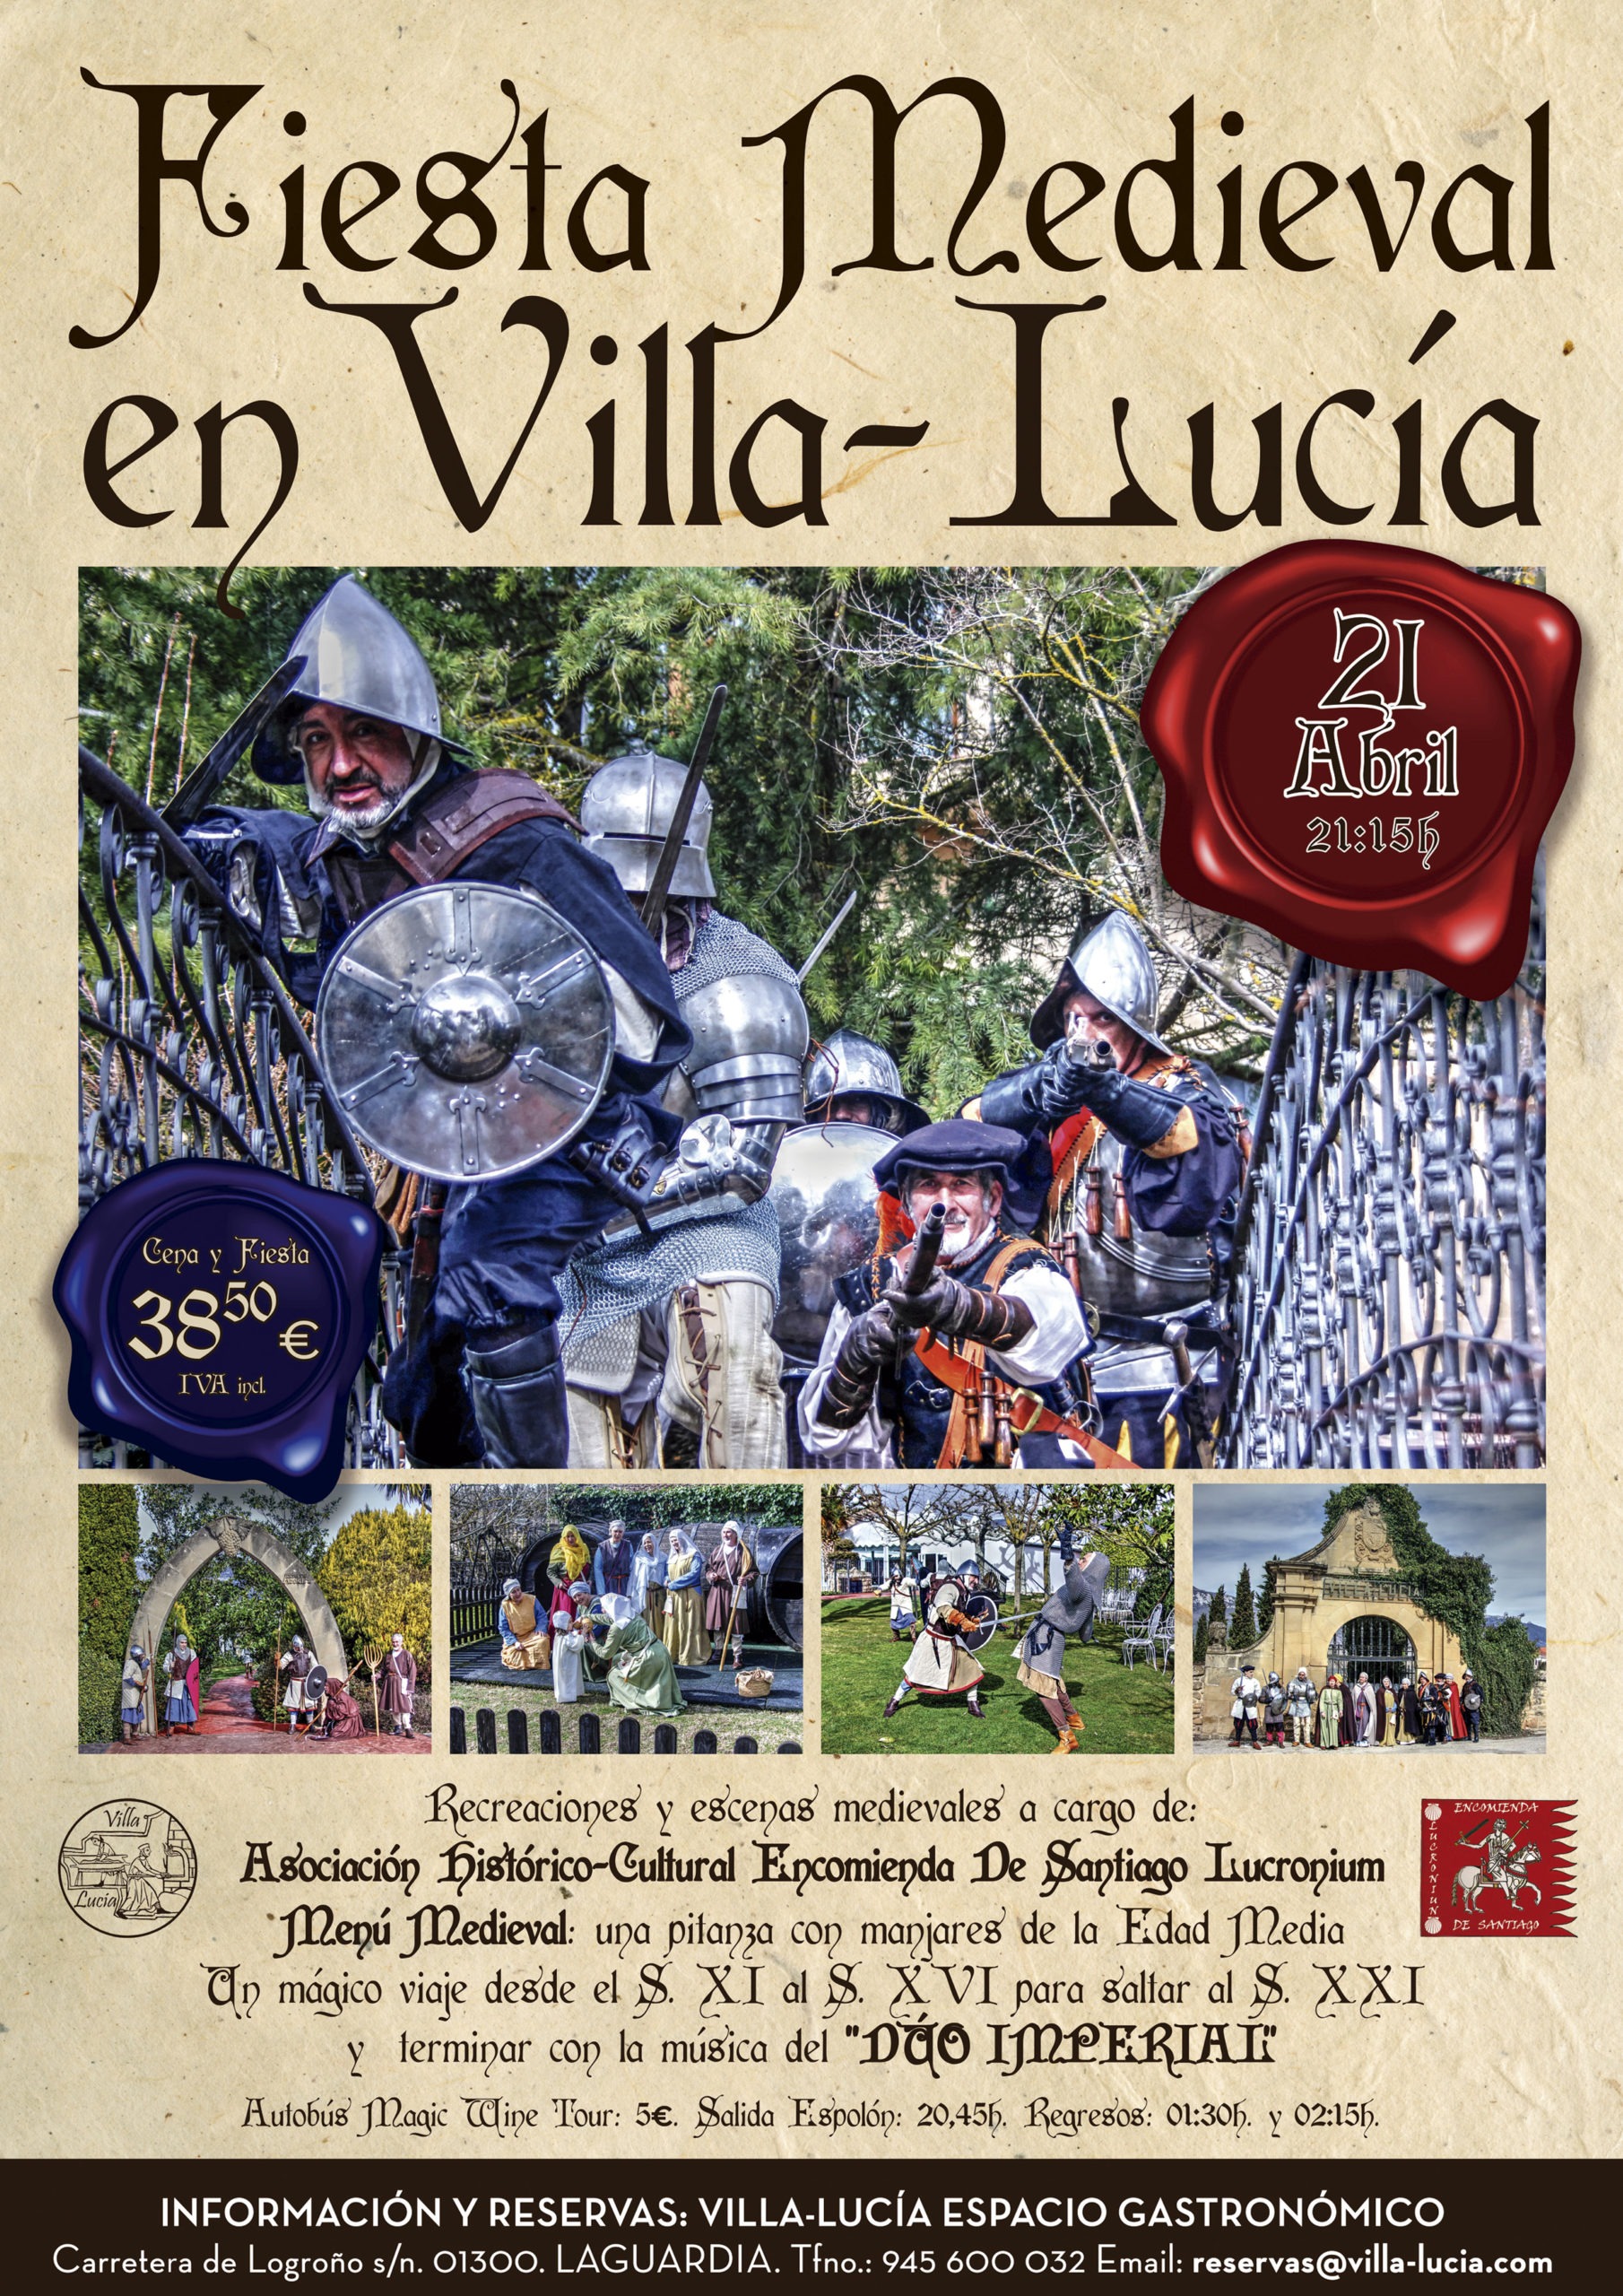 Fiesta Medieval by Villa-Lucía, Laguardia – 21 Abril